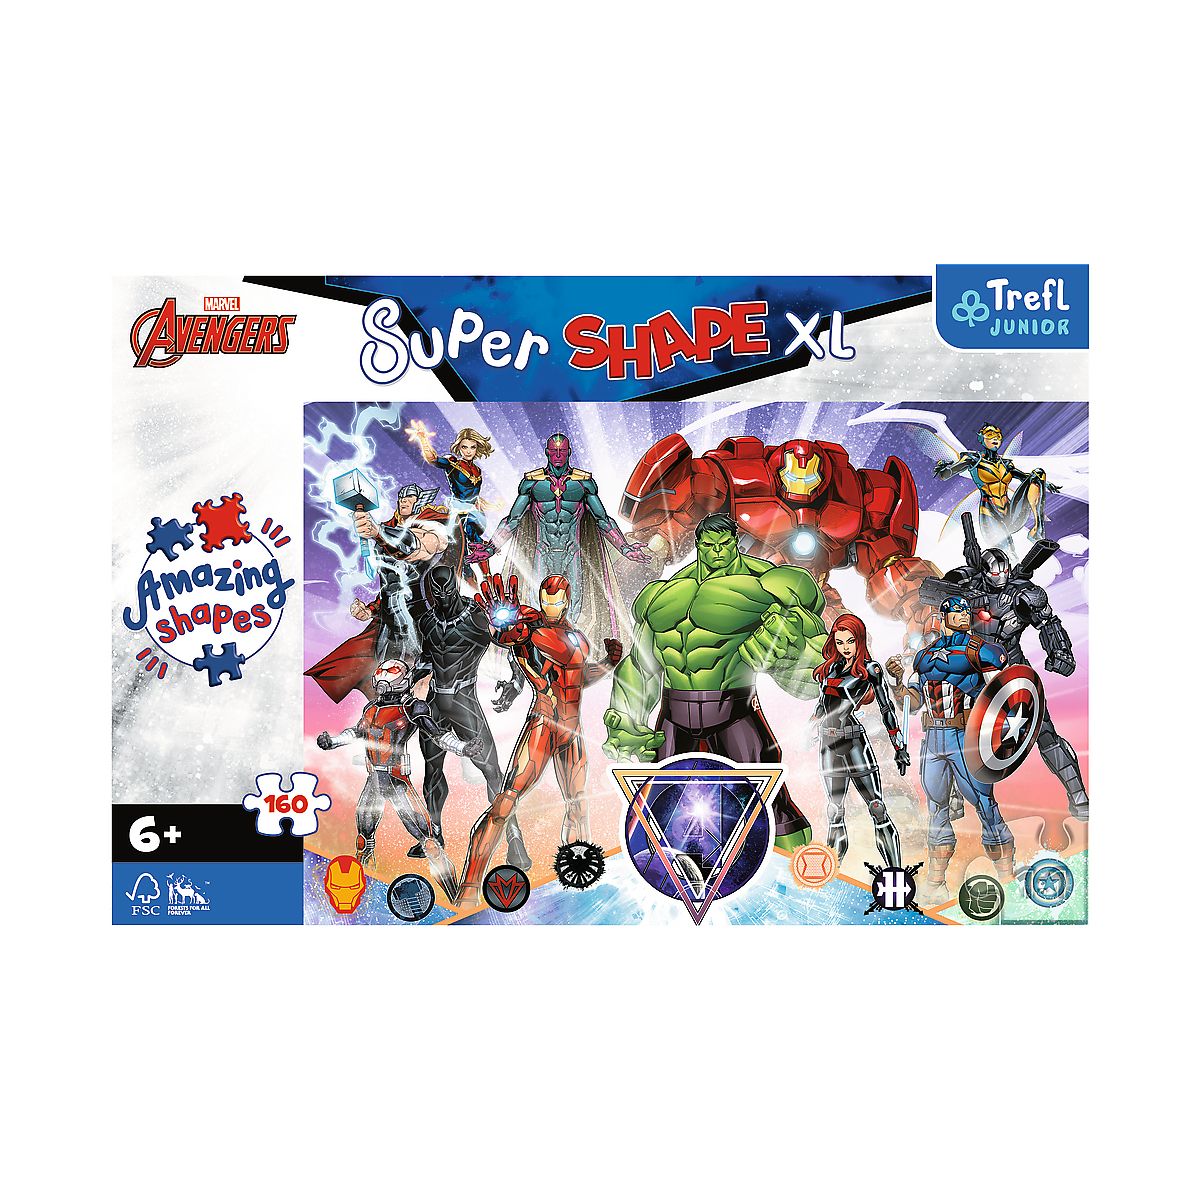 Puzzle Trefl Avengers XL Odwaga Avengers 160 el. (50023)